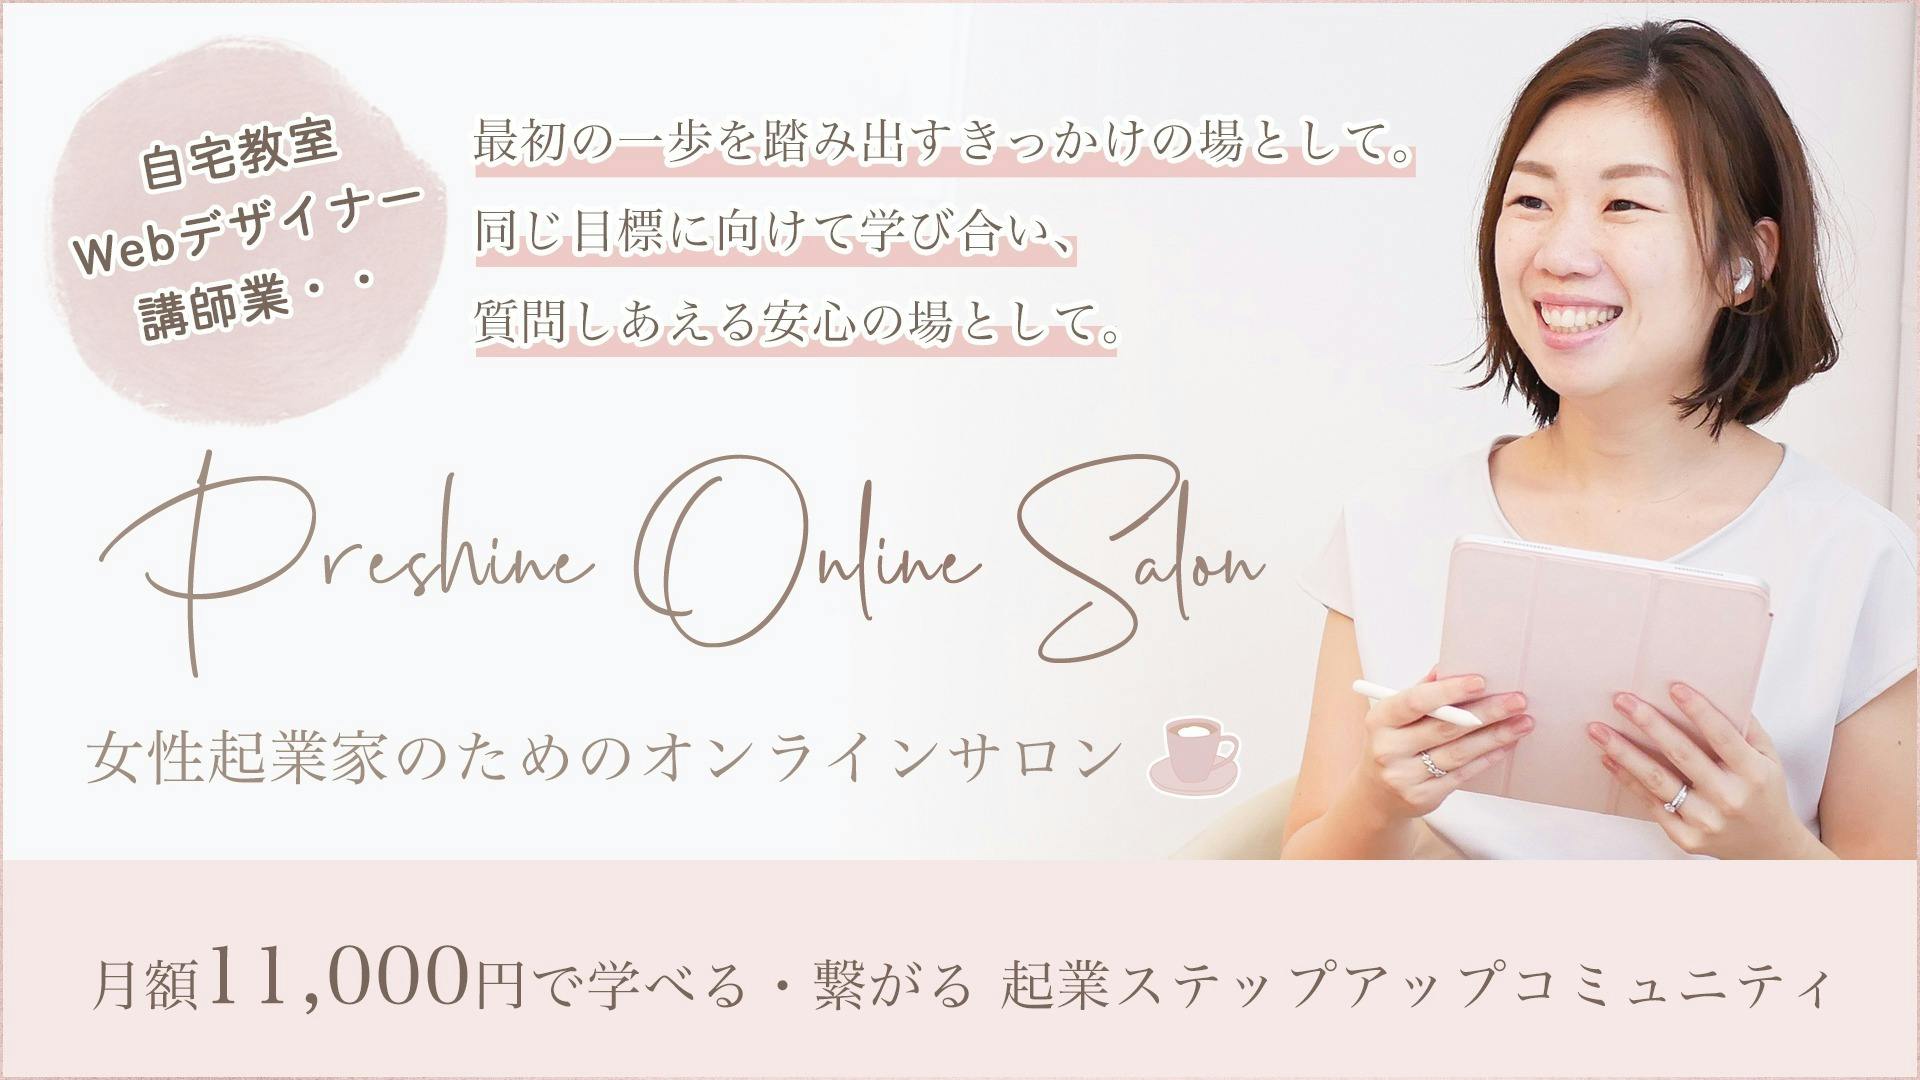 Web集客コンサルタント 有田絵梨 - 女性起業家に必要なWeb集客を学ぶオンラインサロン - DMM オンラインサロン